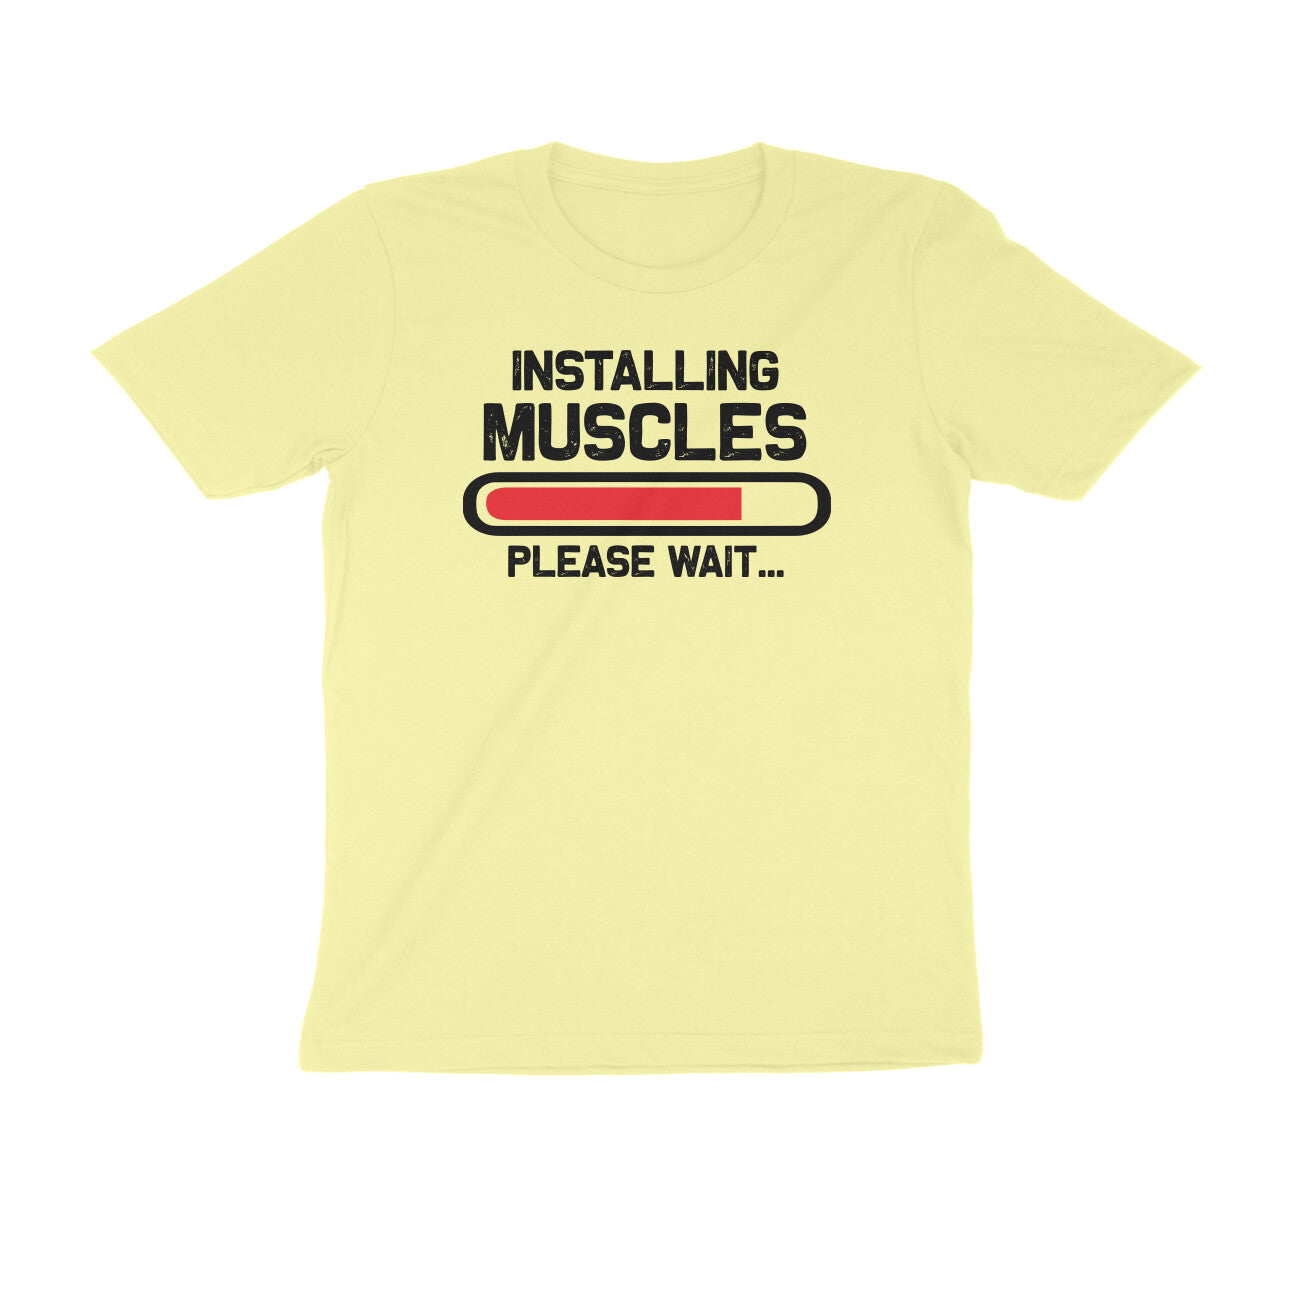 TNH - Men's Round Neck Tshirt - Installing Muscles